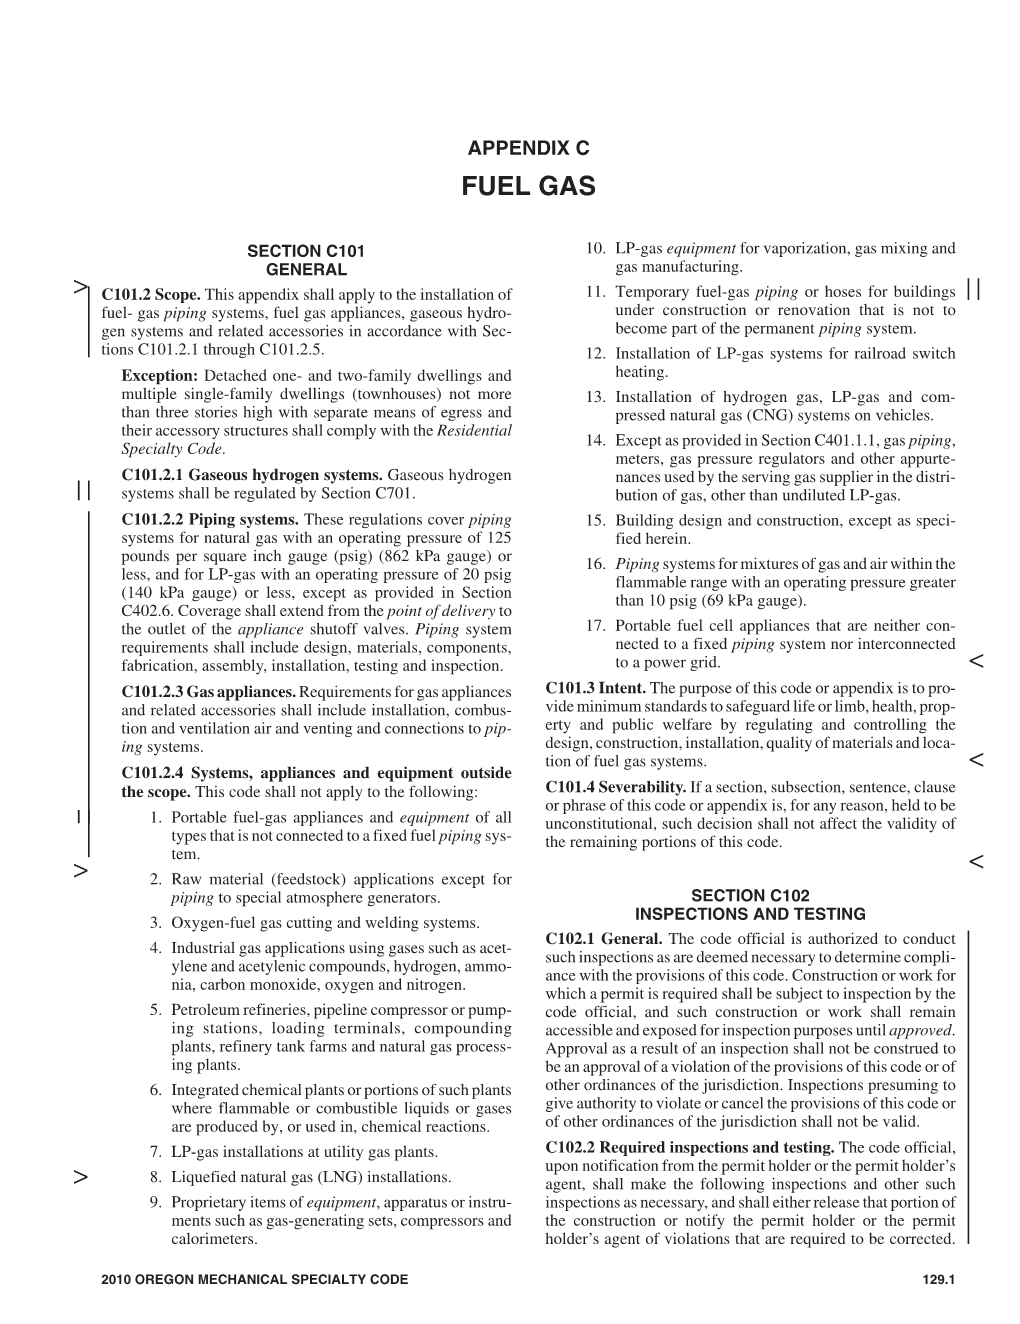 Appendix C Fuel Gas